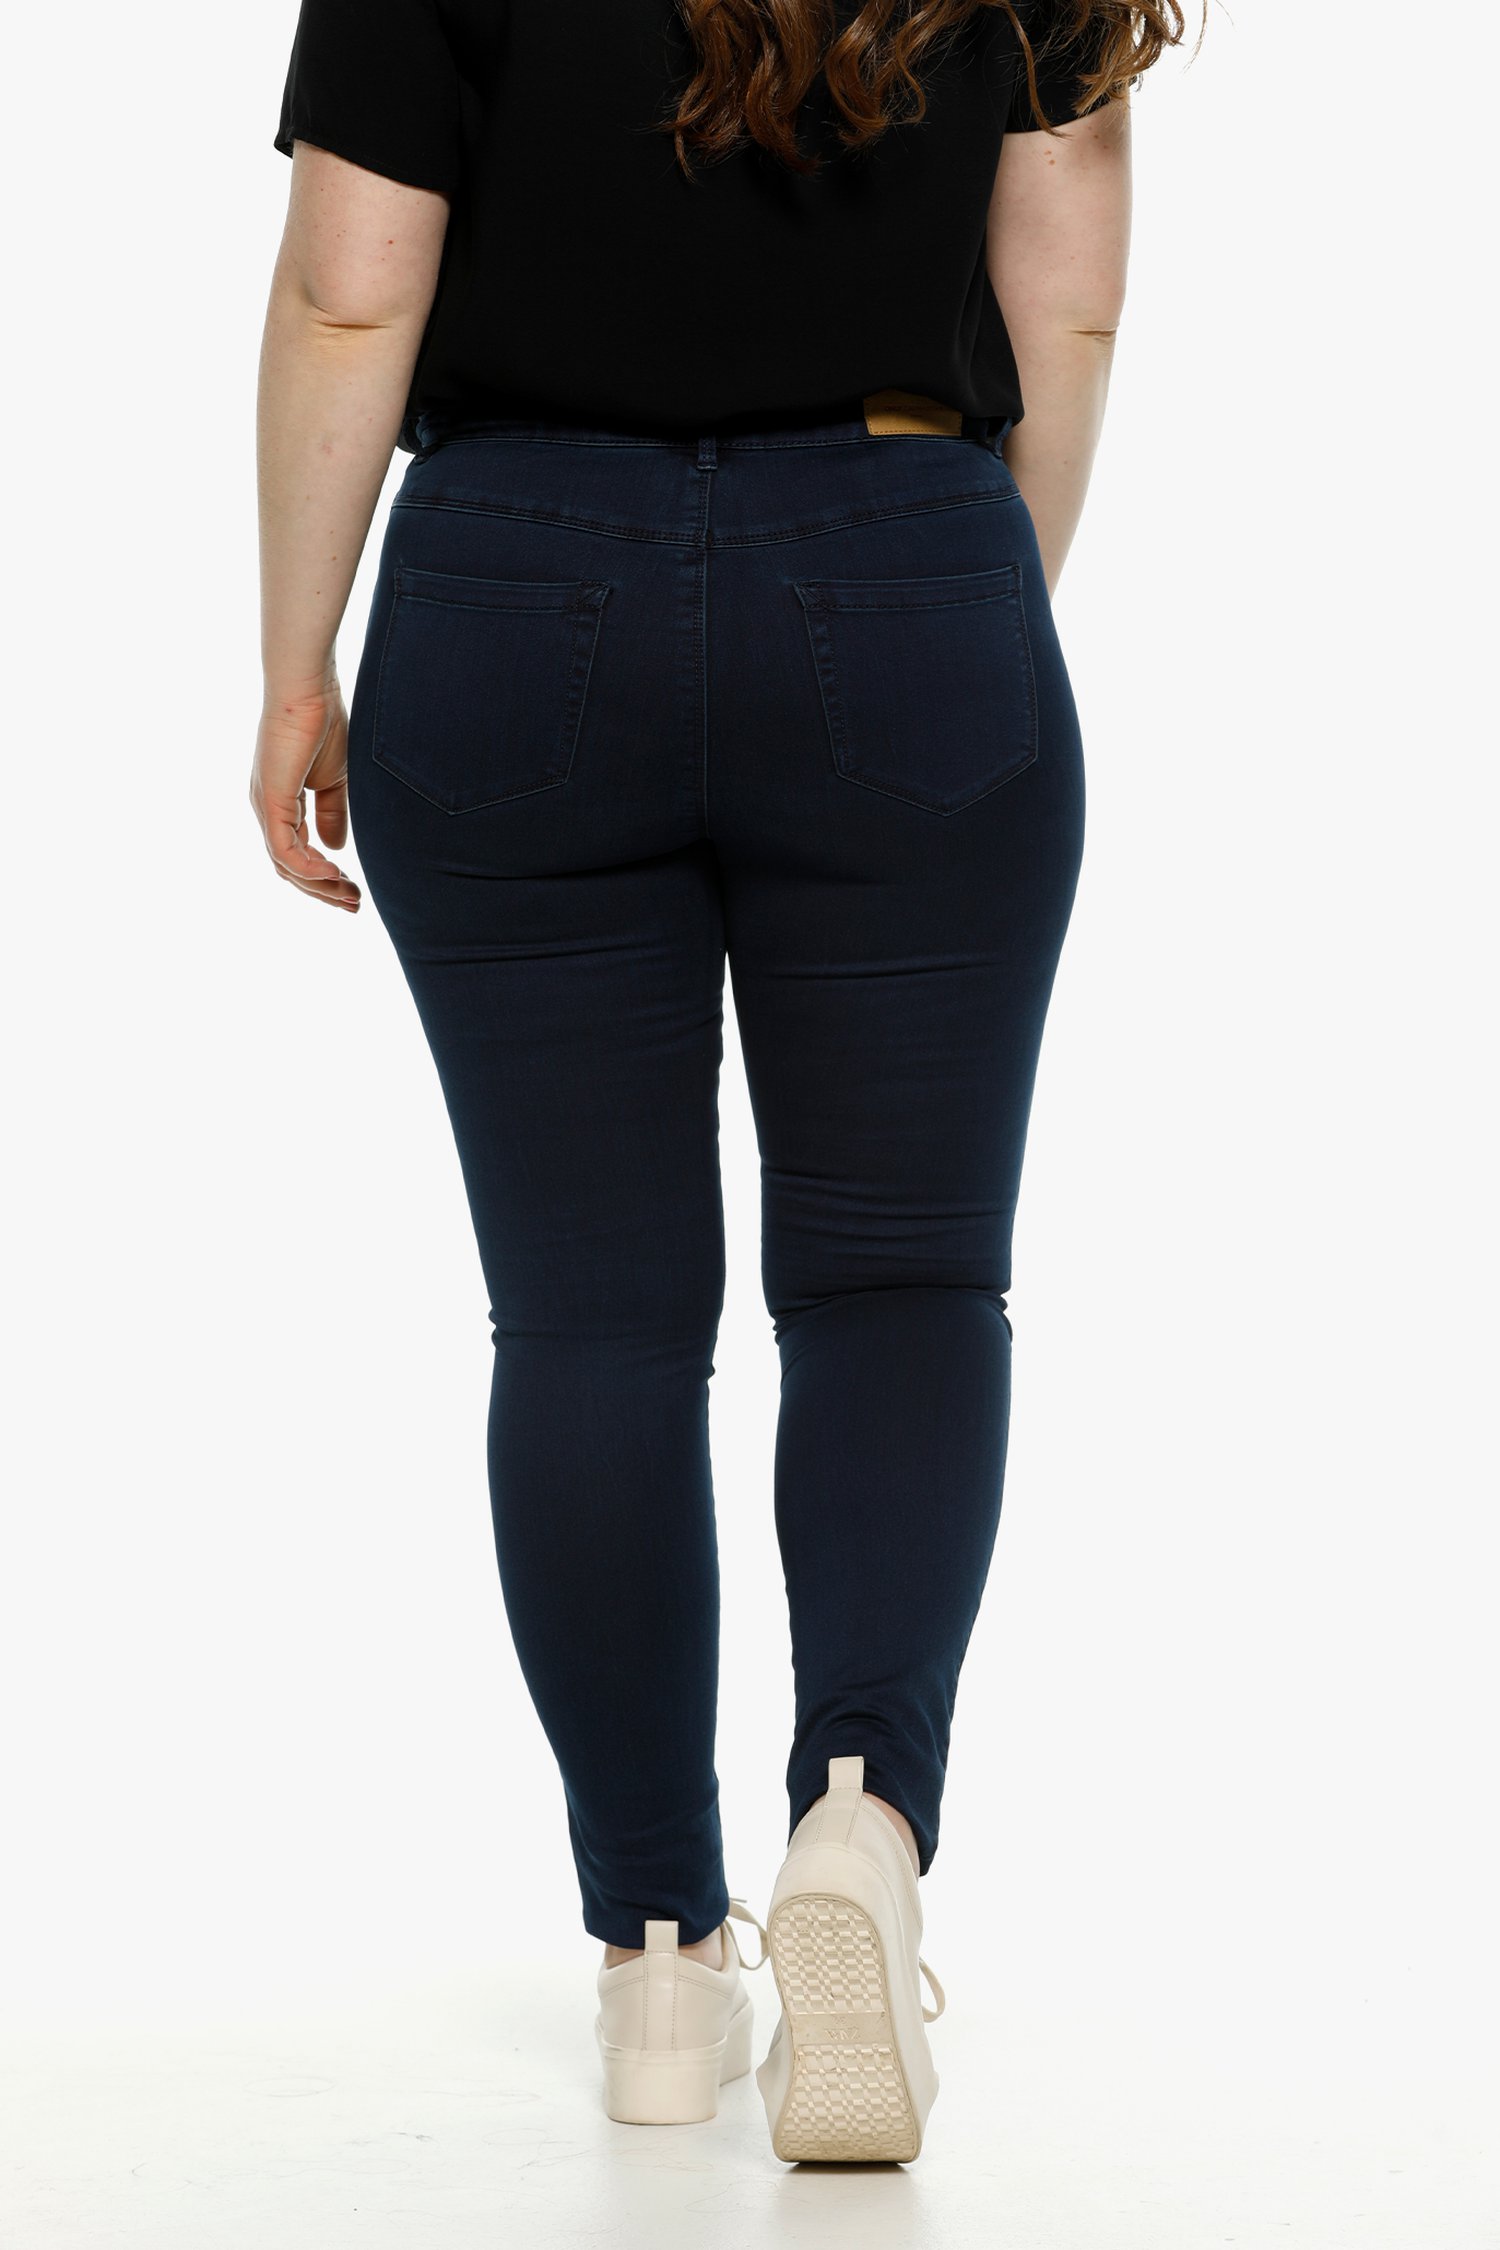 Donkerblauwe high waist jeans - skinny fit van Only Carmakoma voor Dames